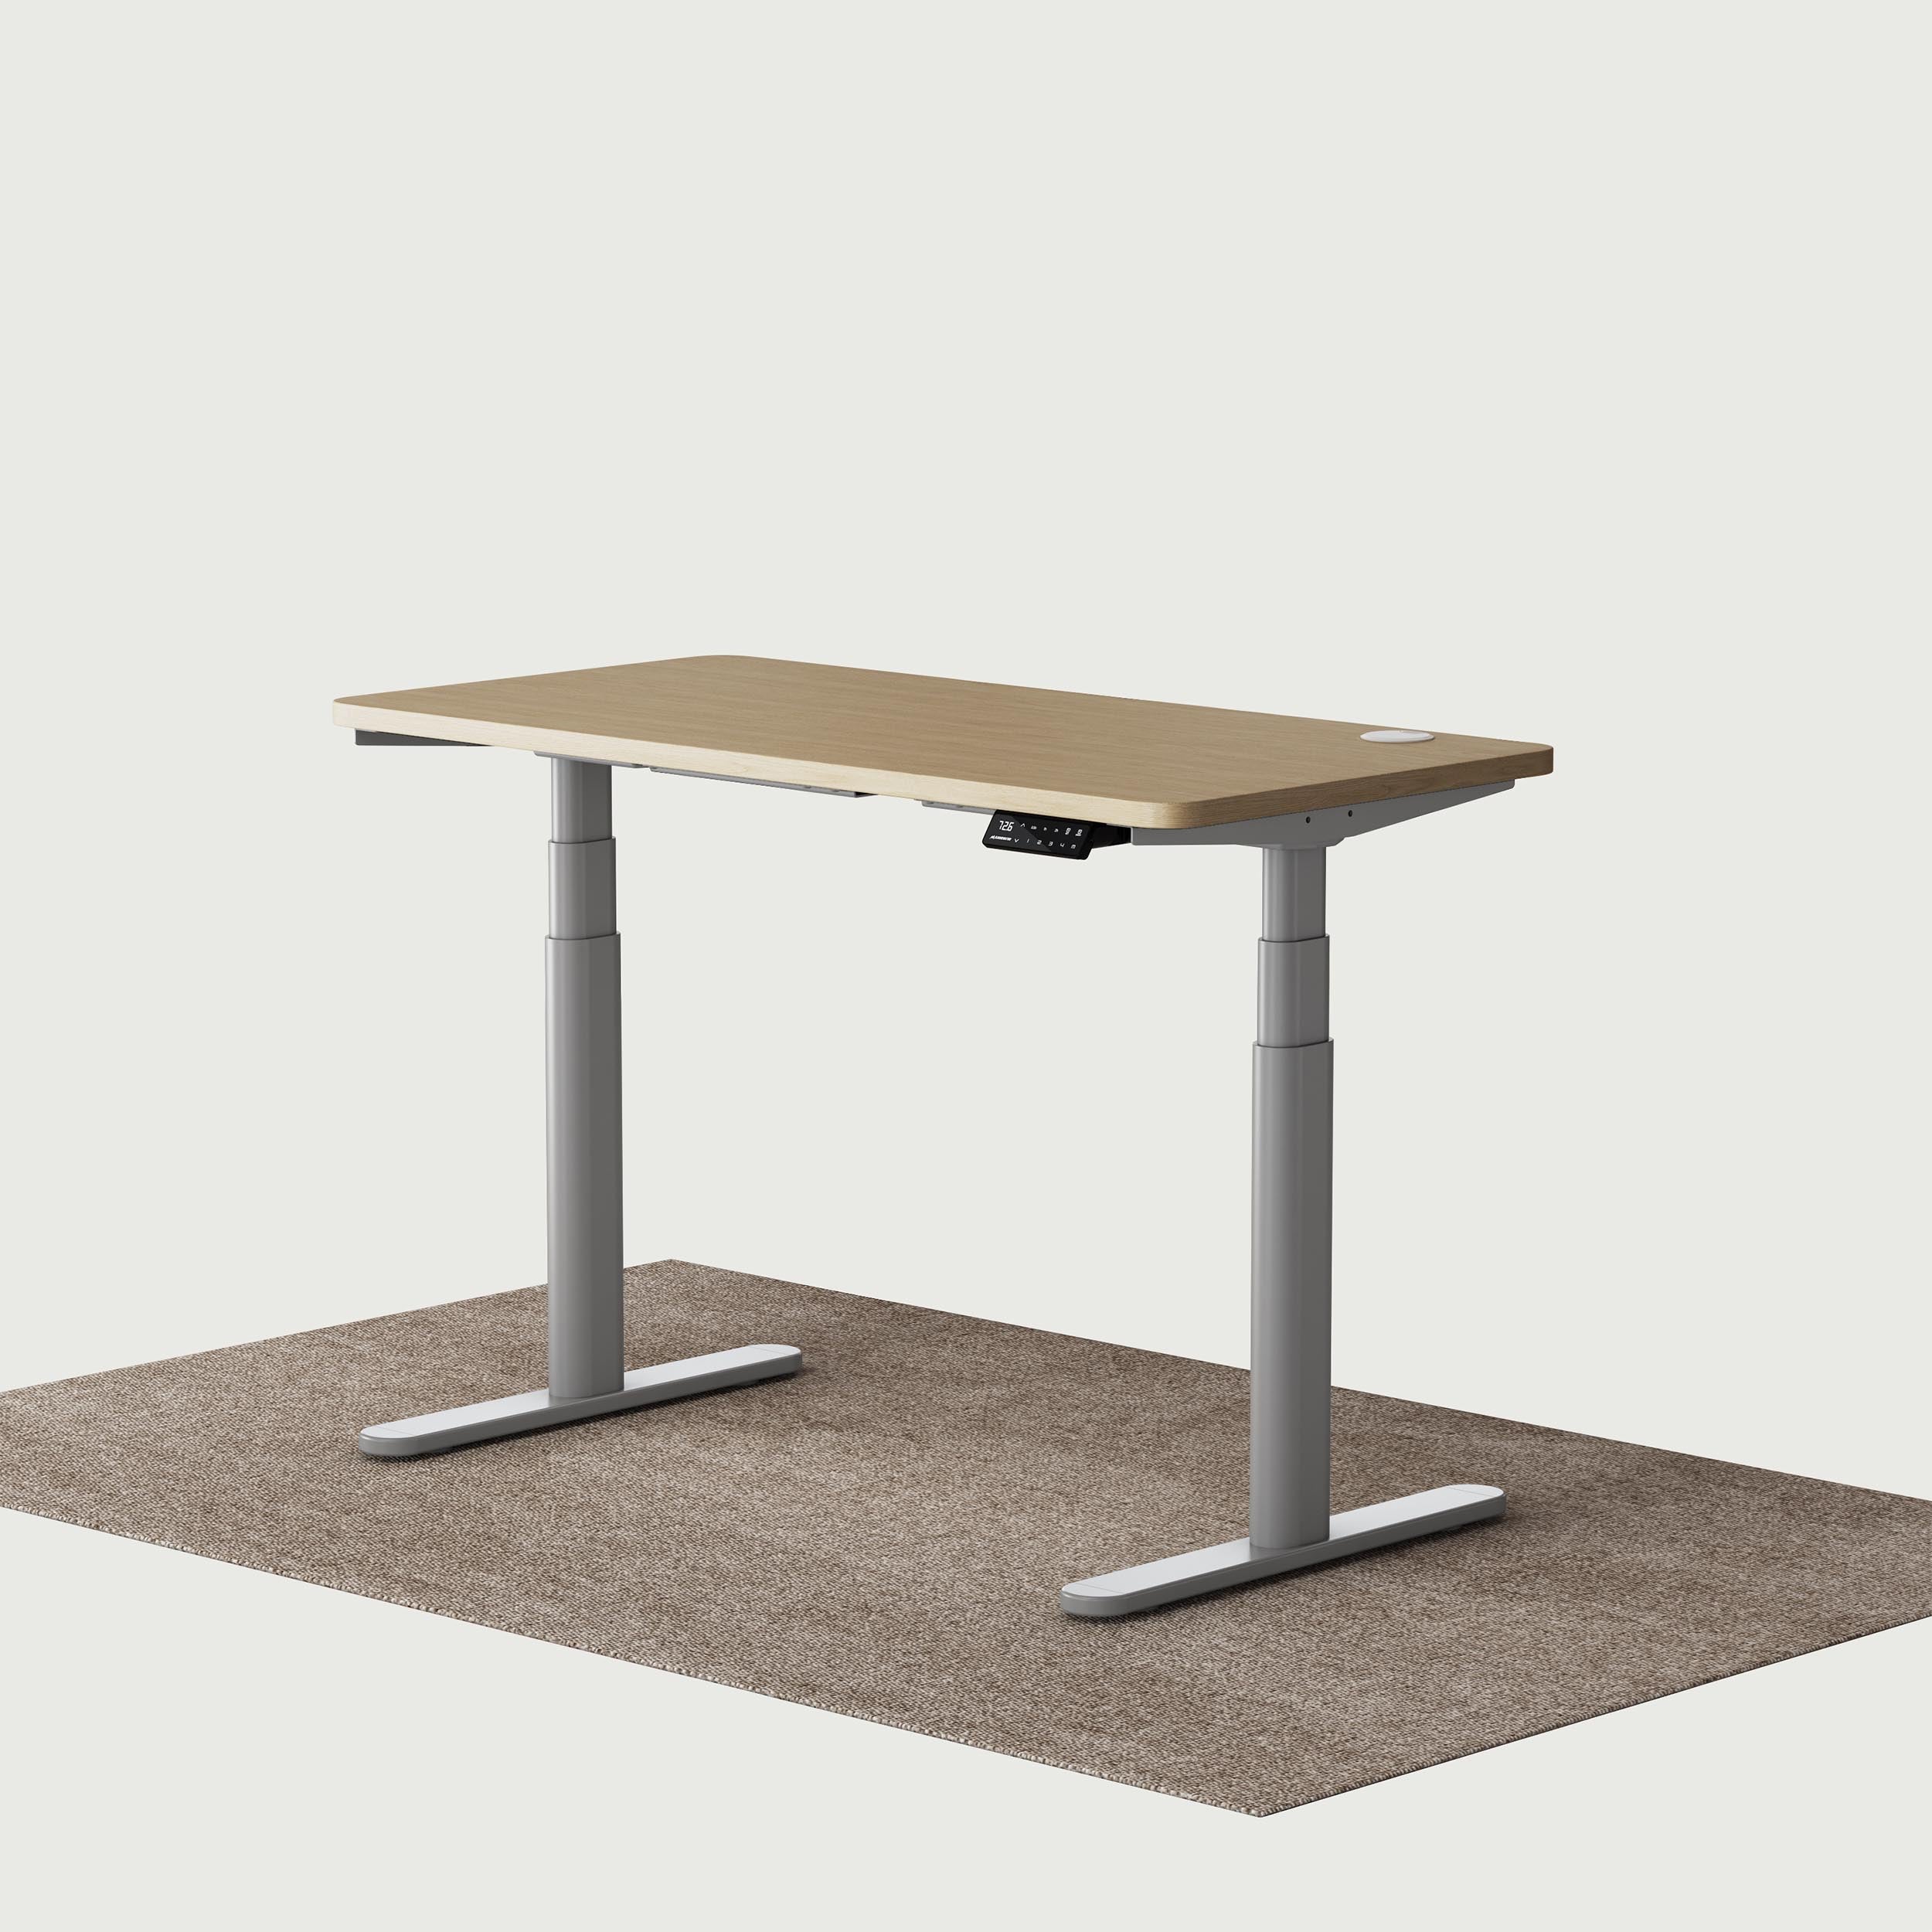 TH2 Pro Plus grey oval electric standing desk frame with oak 120x60 cm desktop